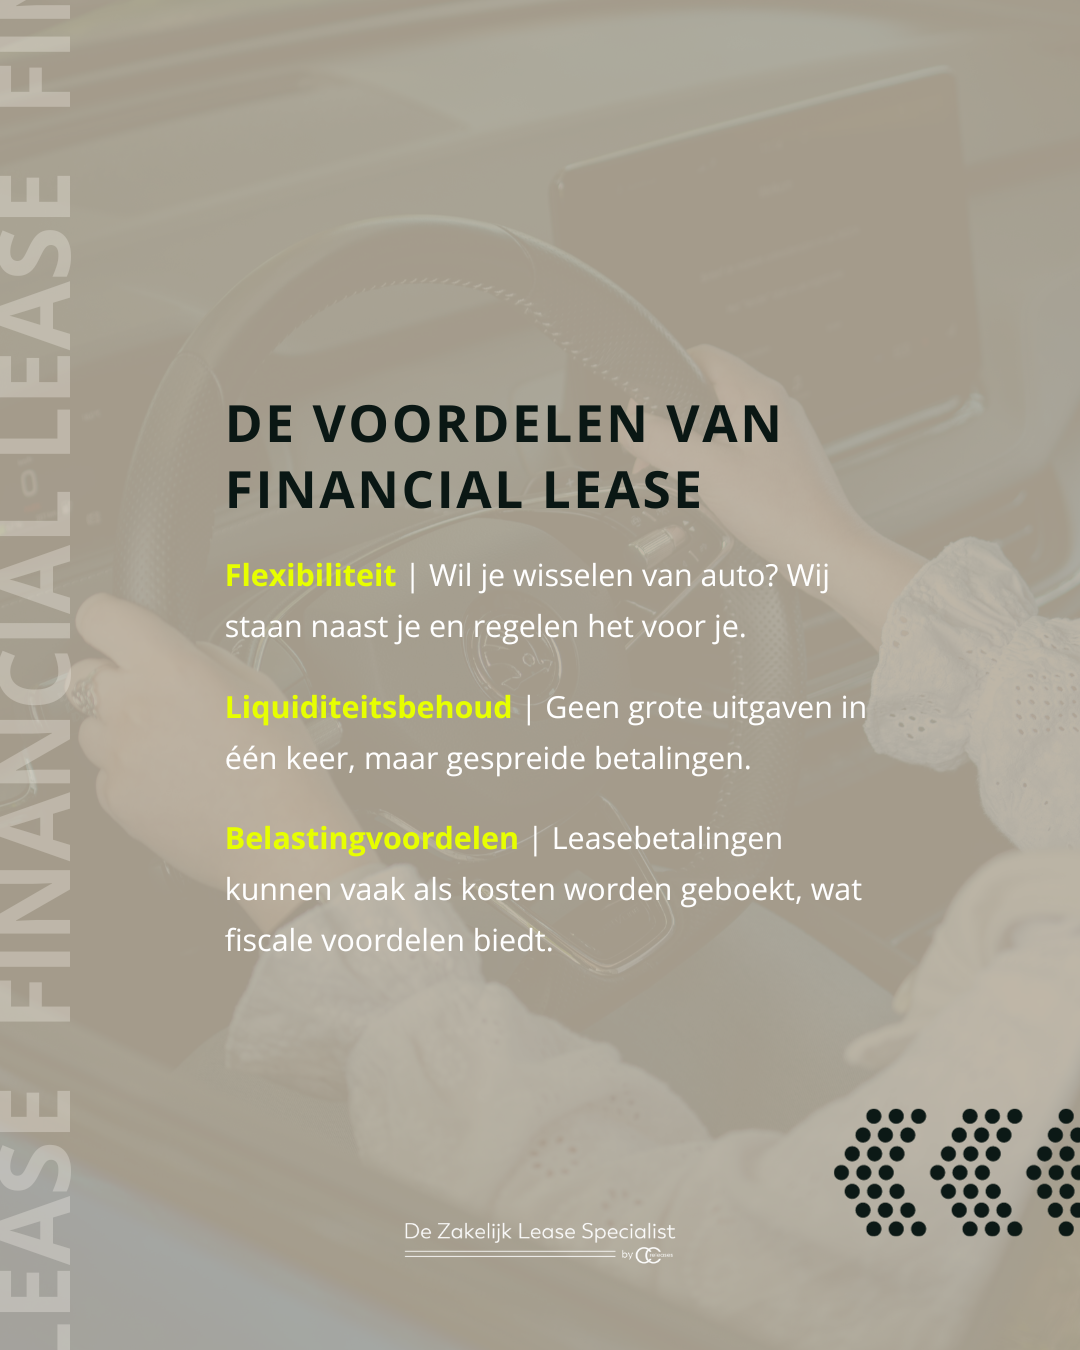 Financial leasen